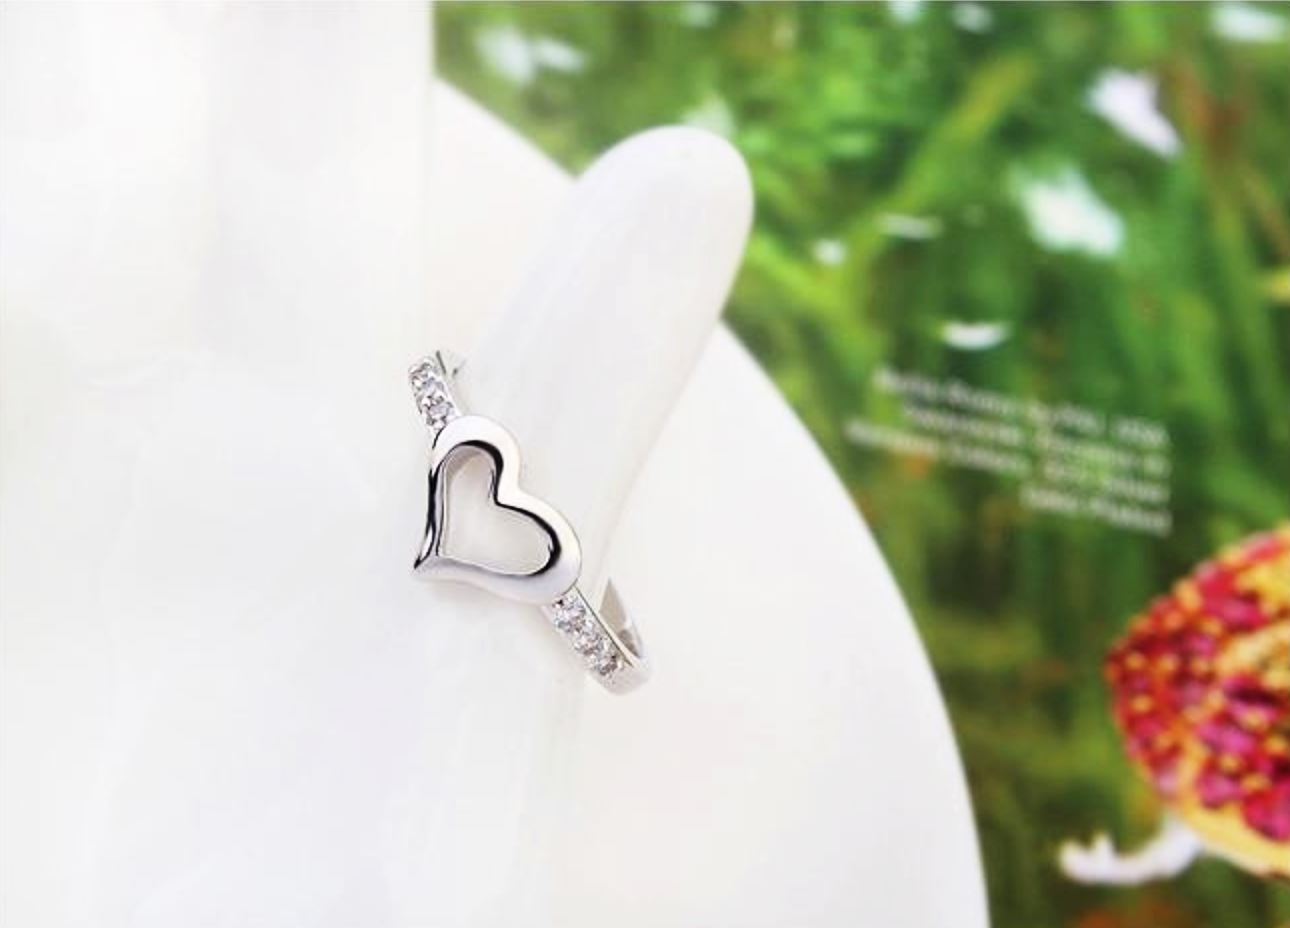 Cute Heart Silver Womens Ring